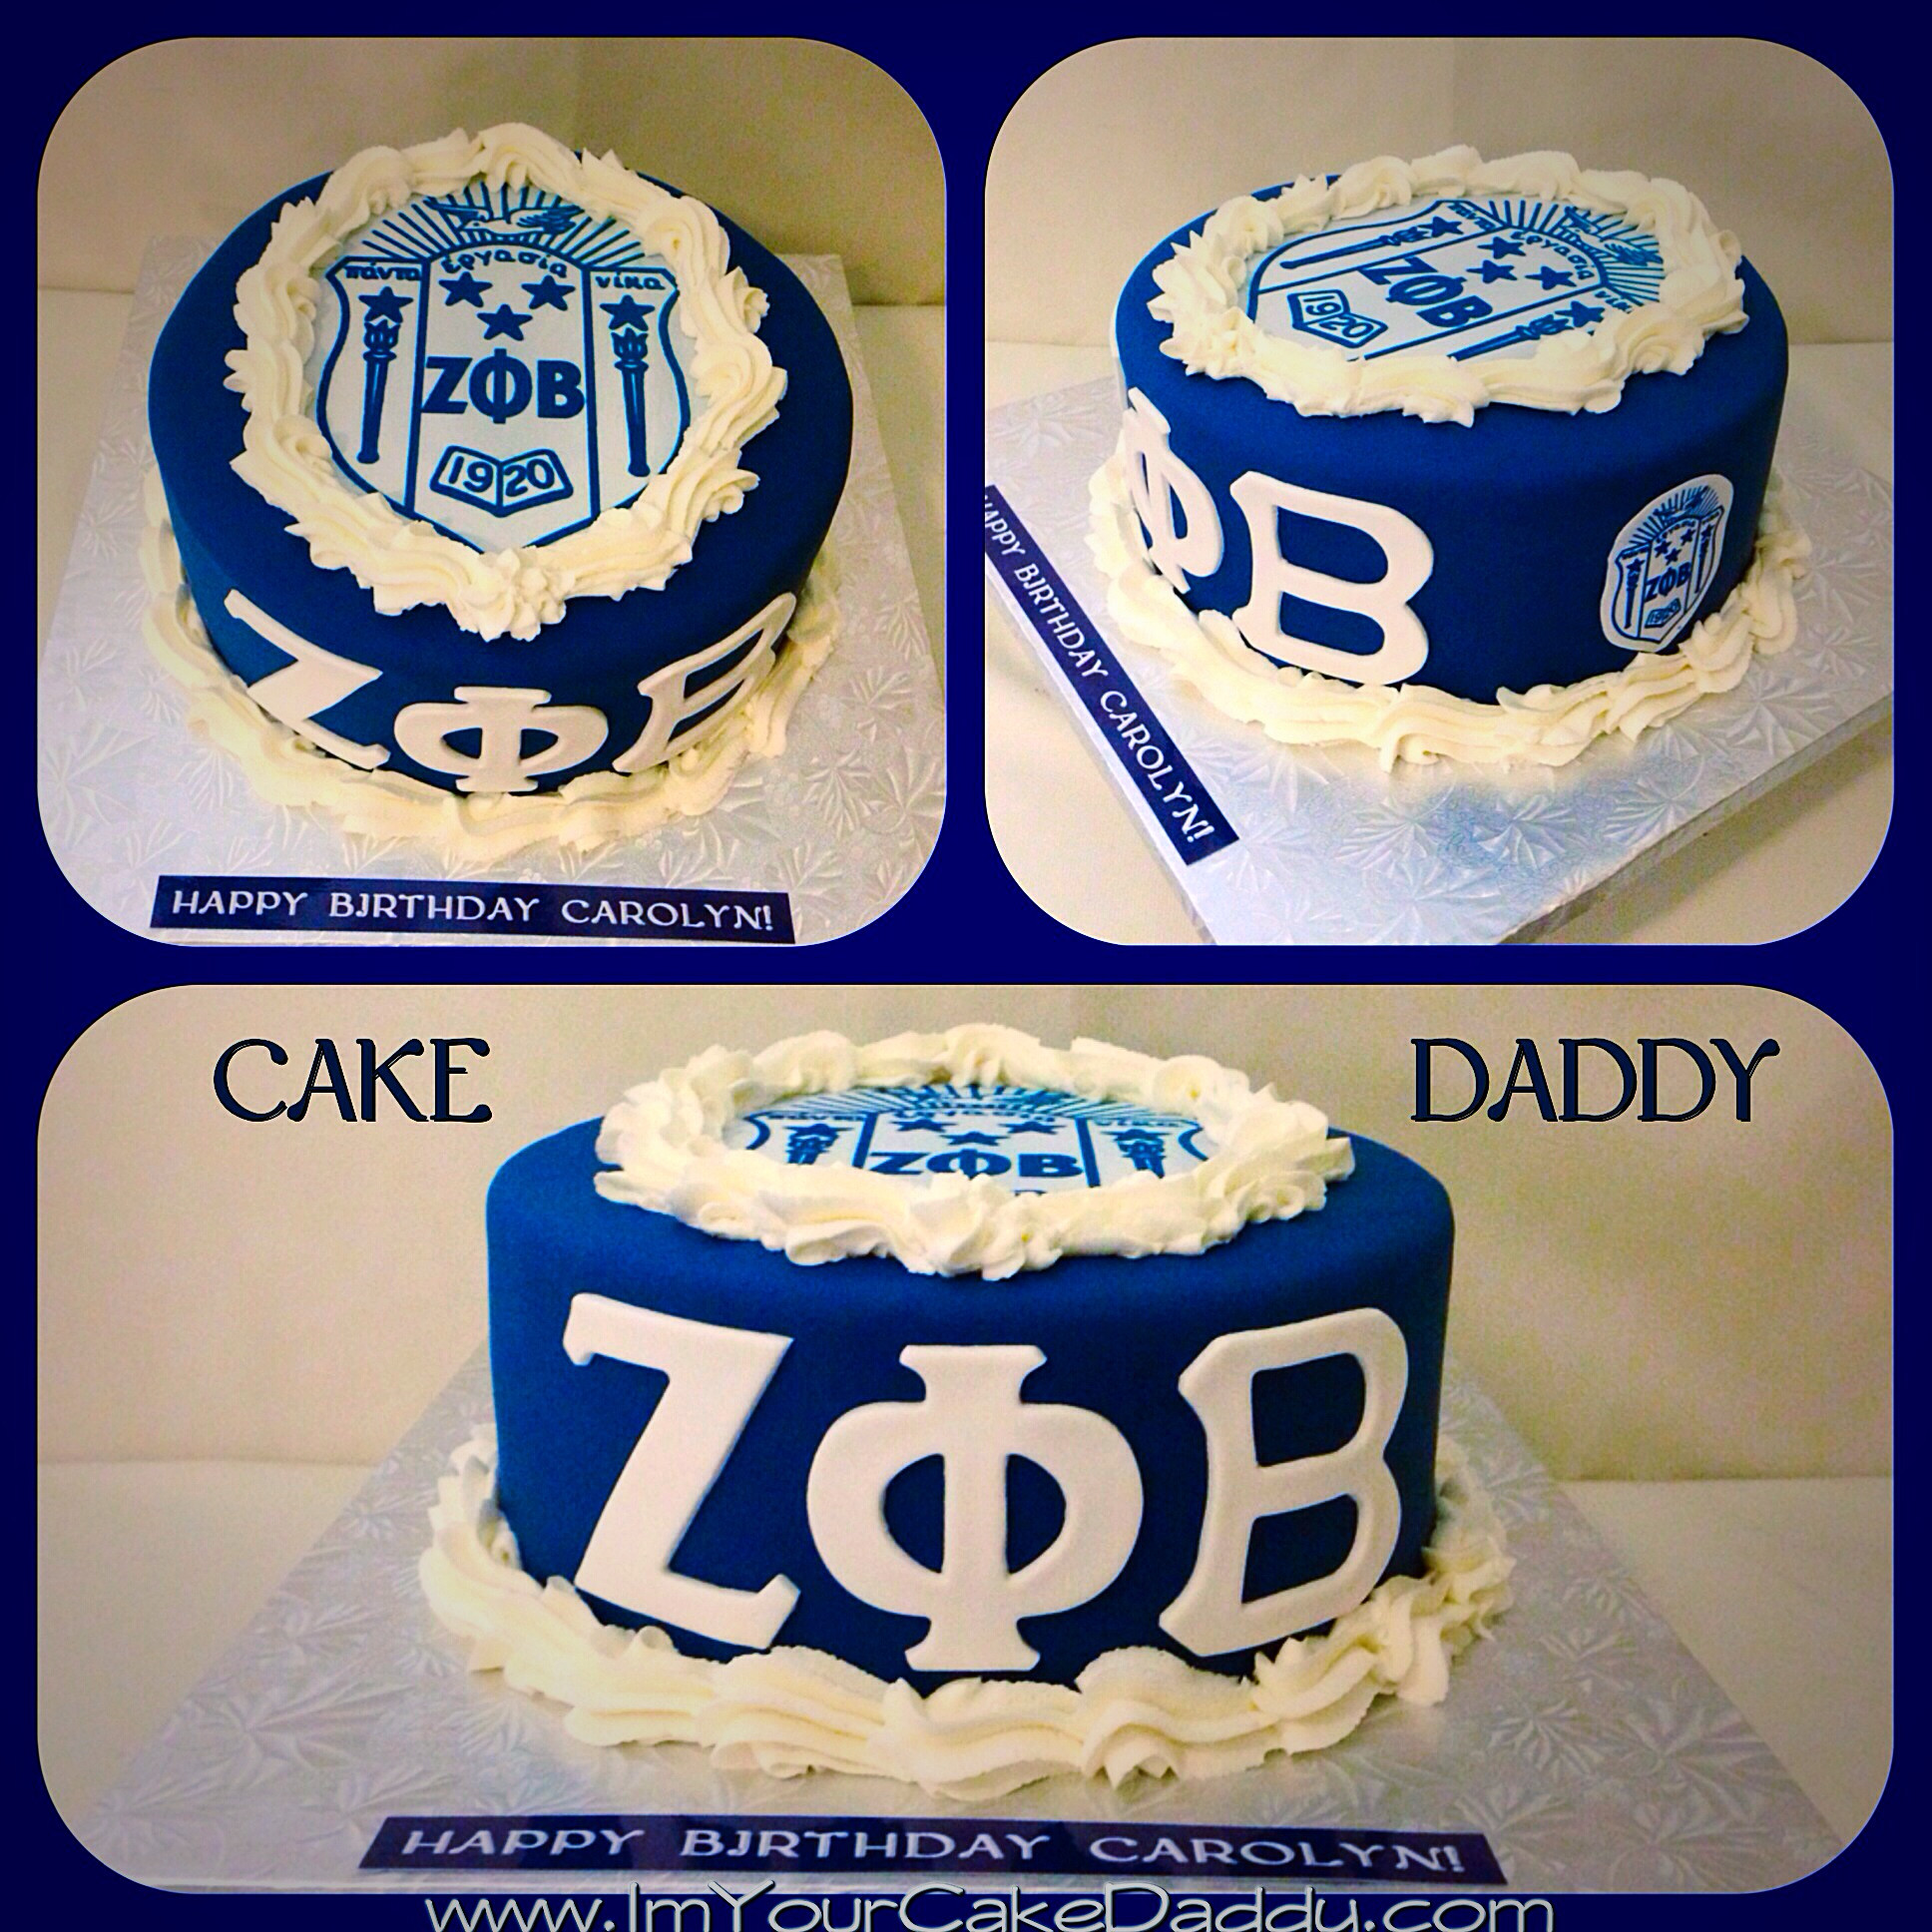 Zeta Phi Beta birthday cake.